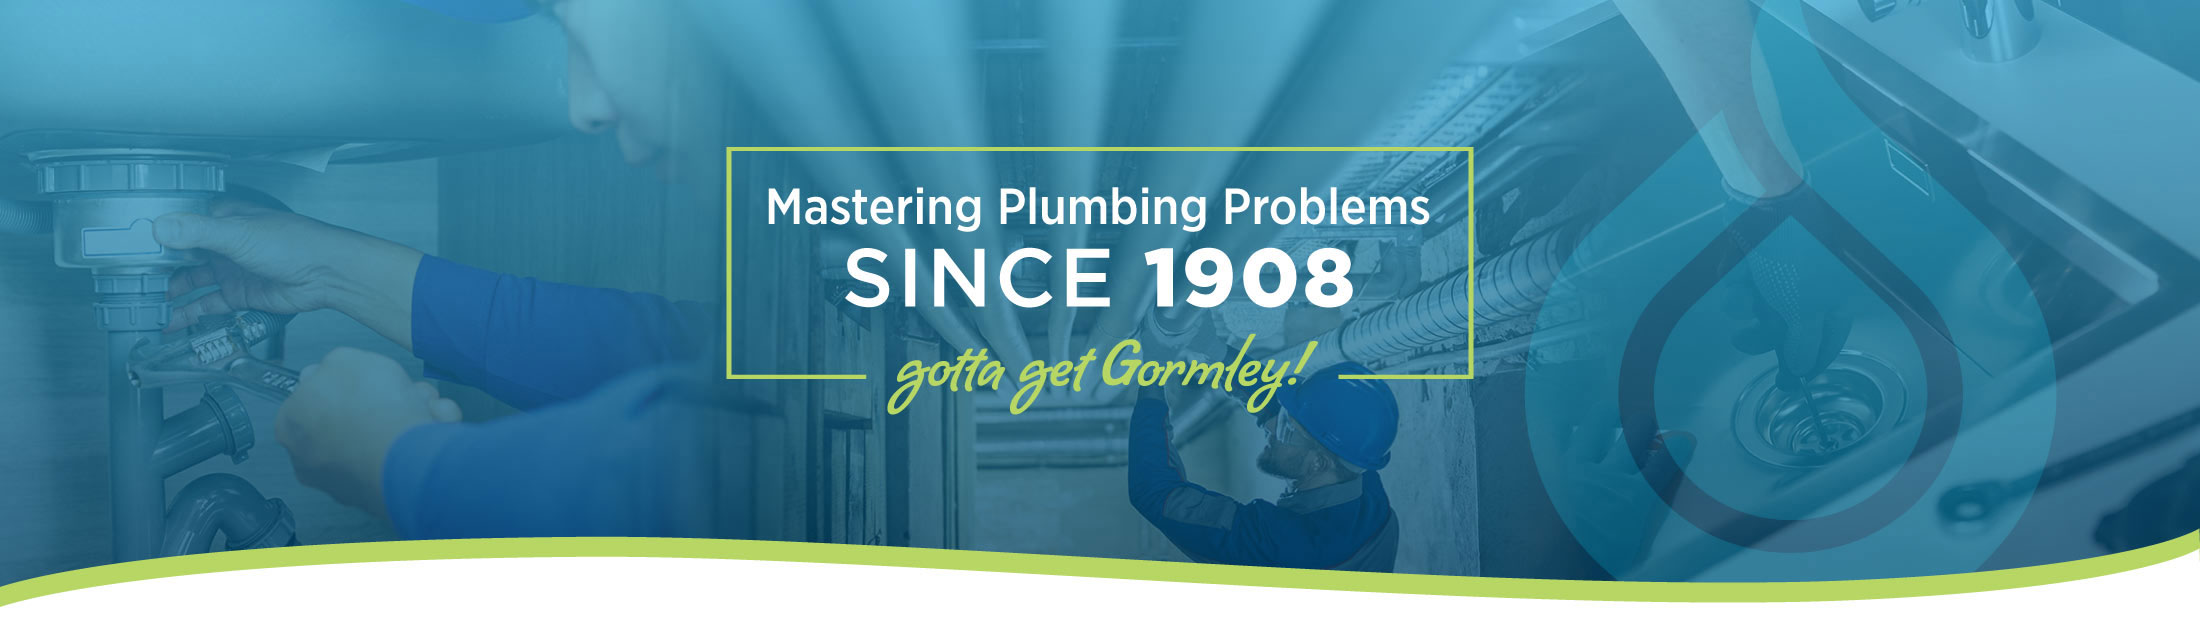 Gormley Plumbing • Mastering Plumbing Problems Since 1908 • gotta get Gormley!